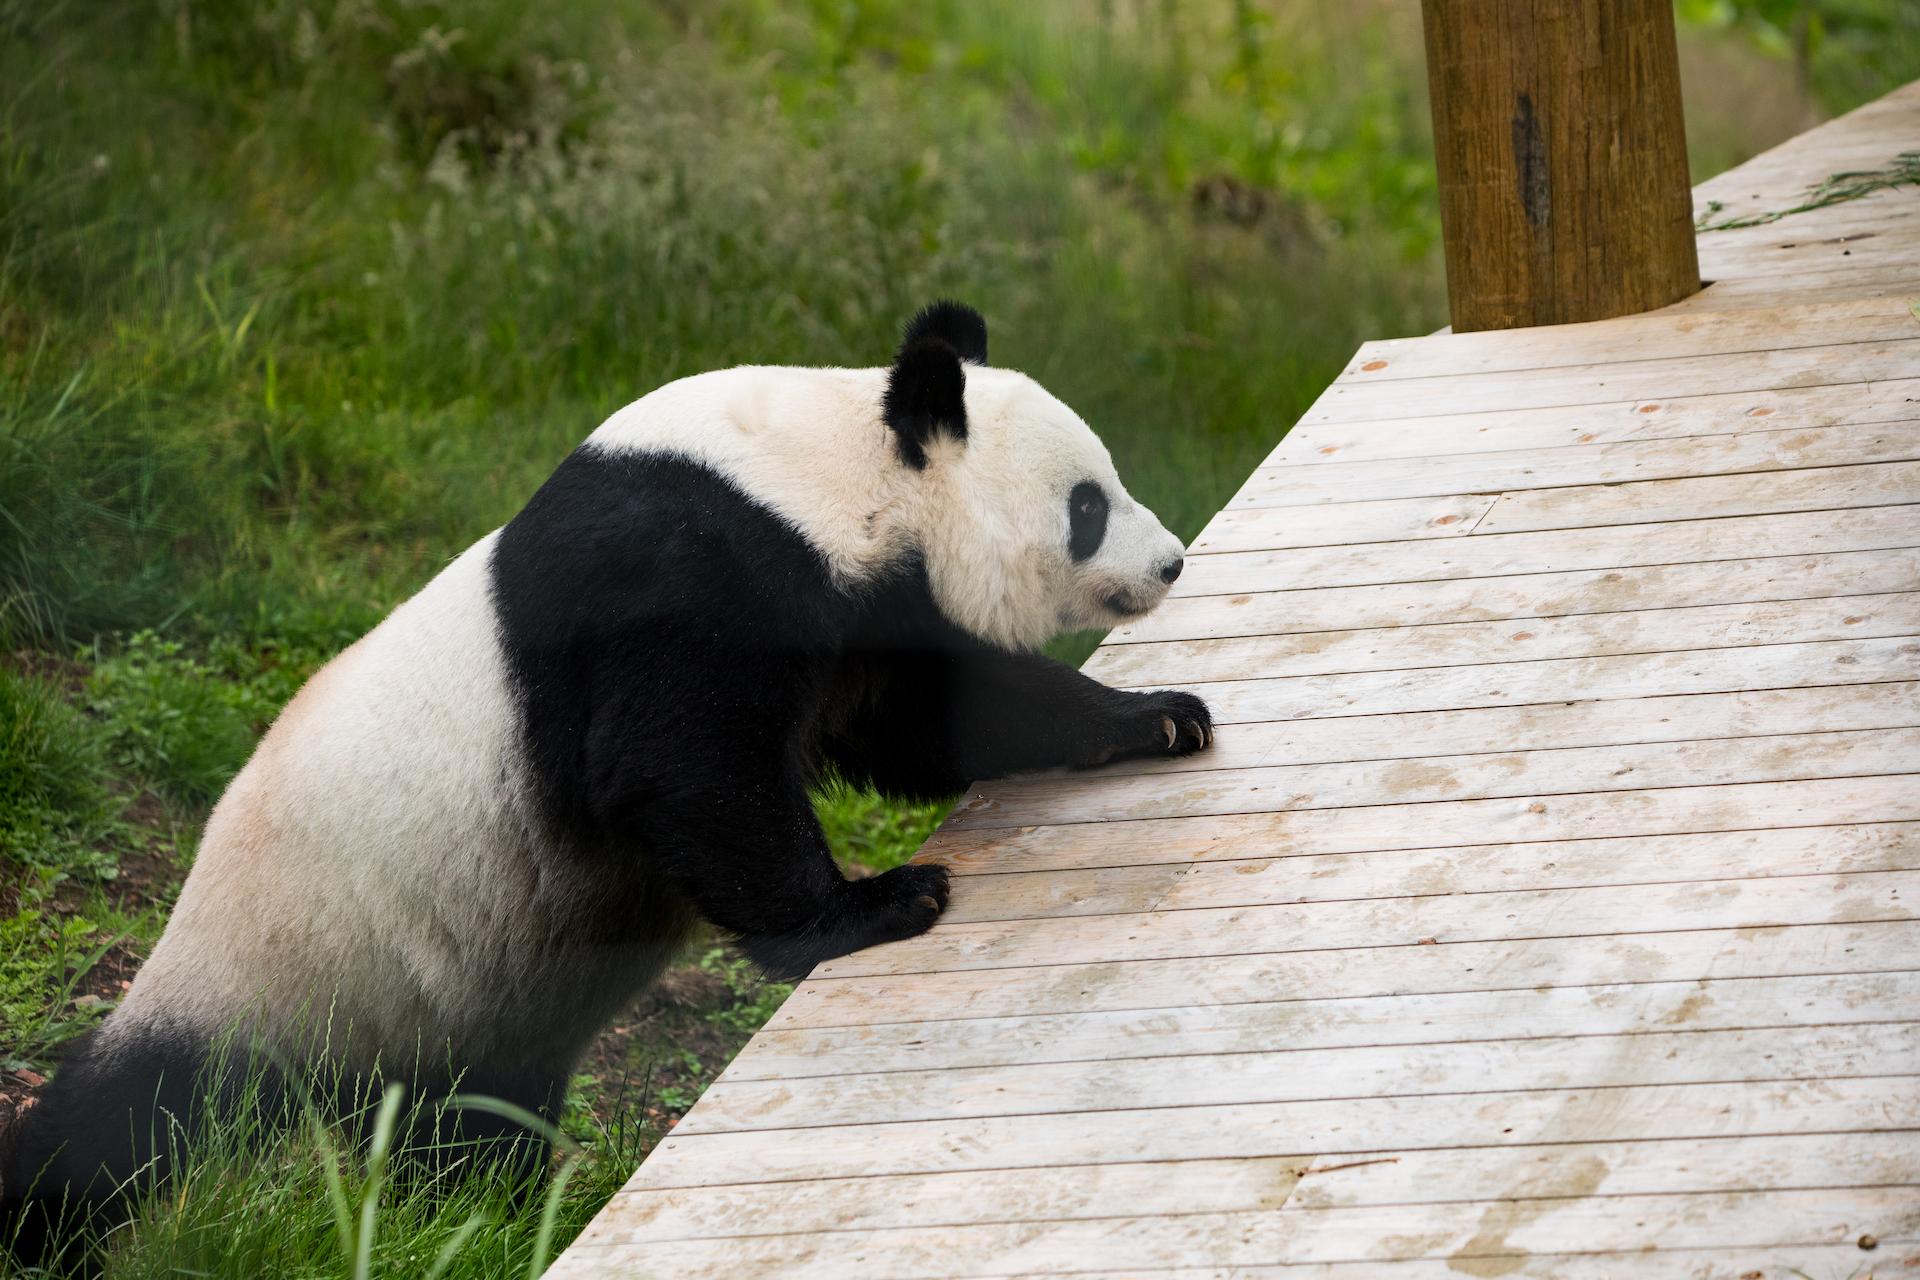 Giant panda Tian Tian climbing up on to wooden climbing frame ramp